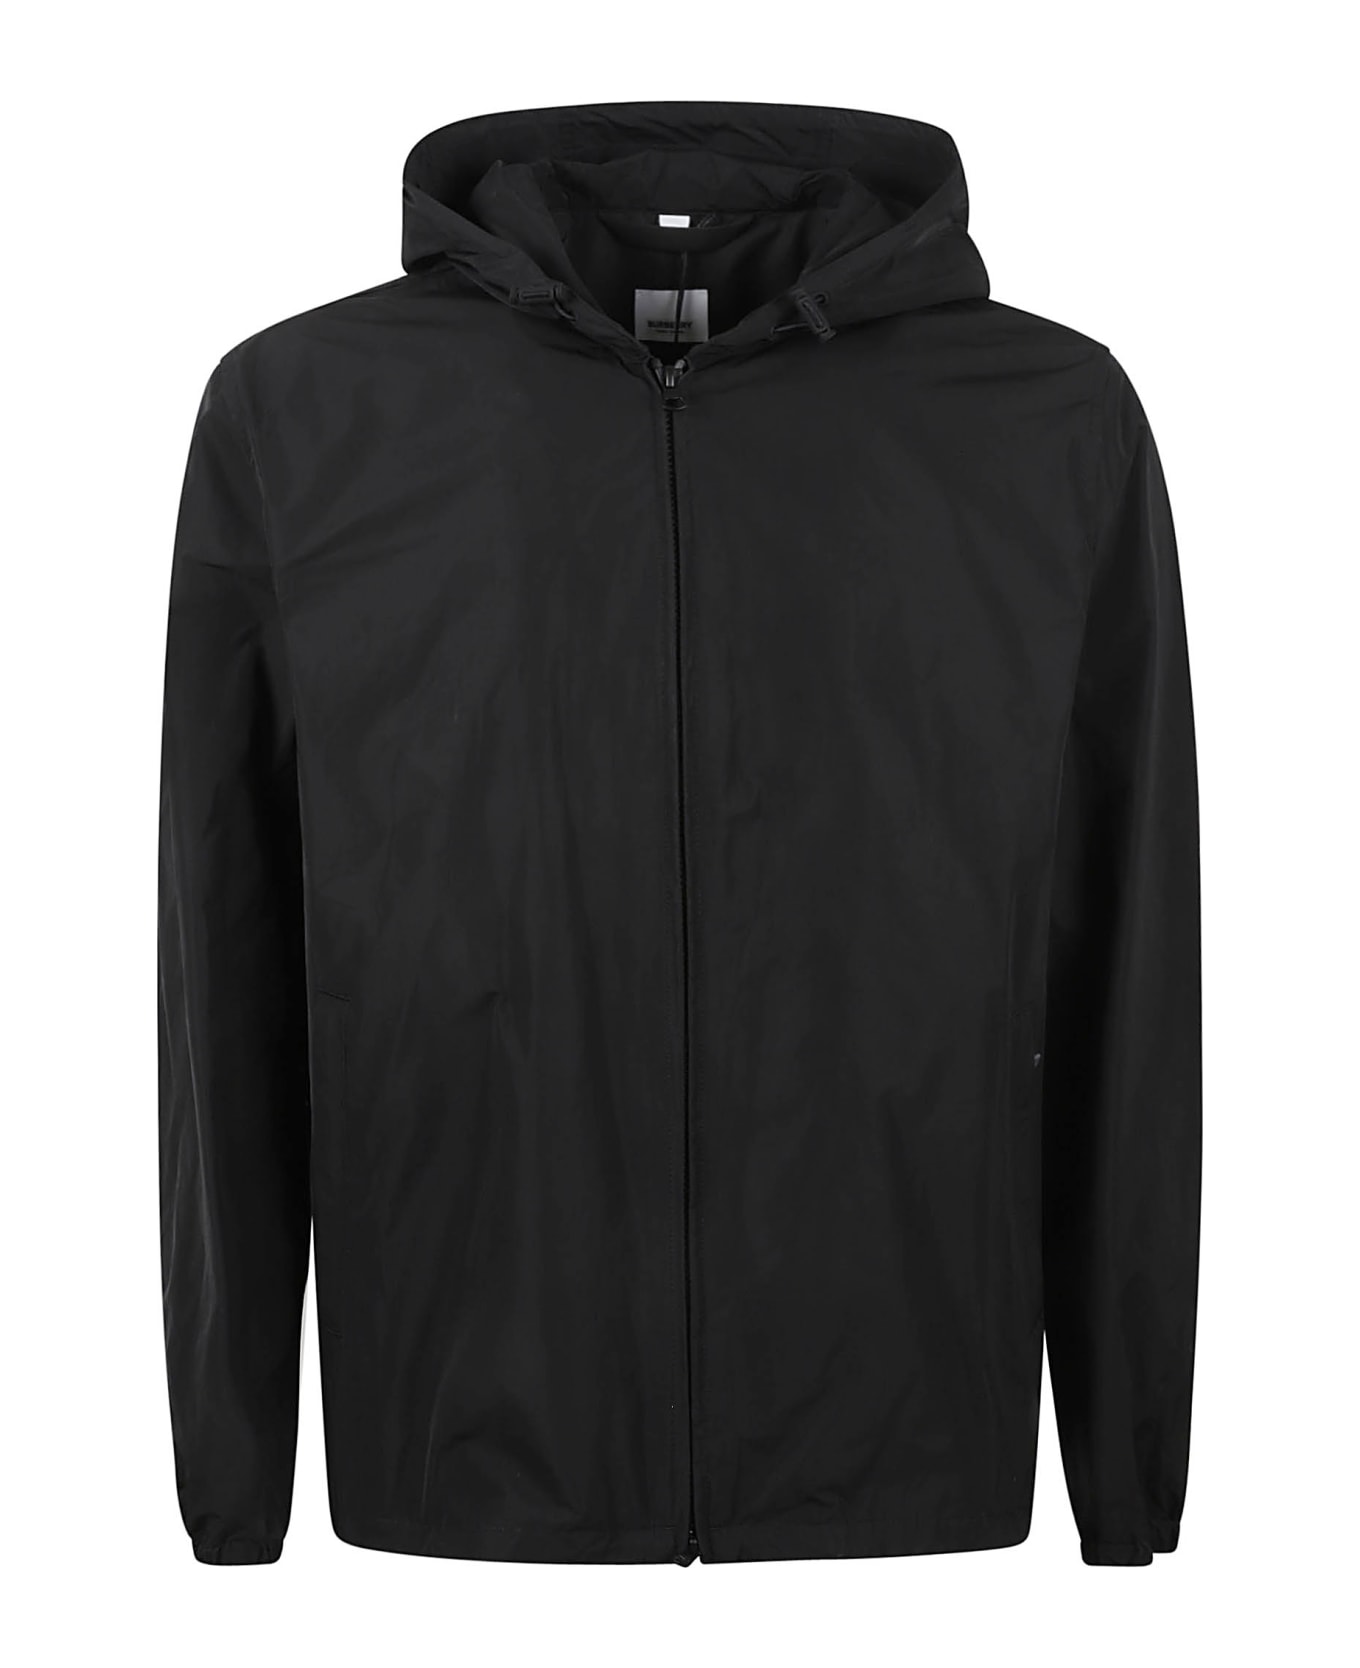 Burberry Rear Logo Hooded Zip Jacket - Black